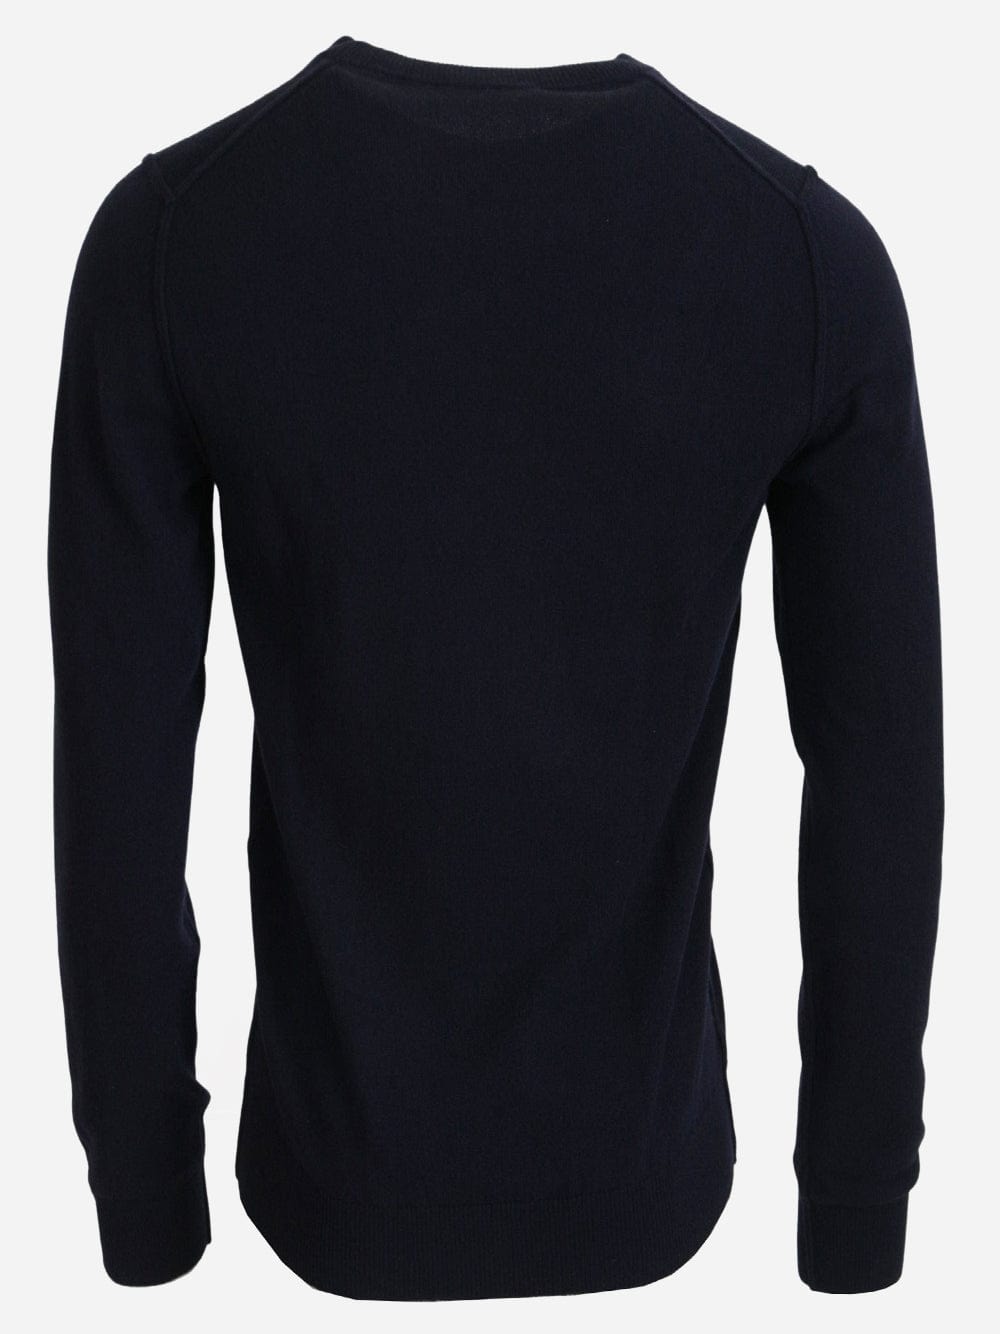 Dolce & Gabbana Iit Print Pullover Sweater